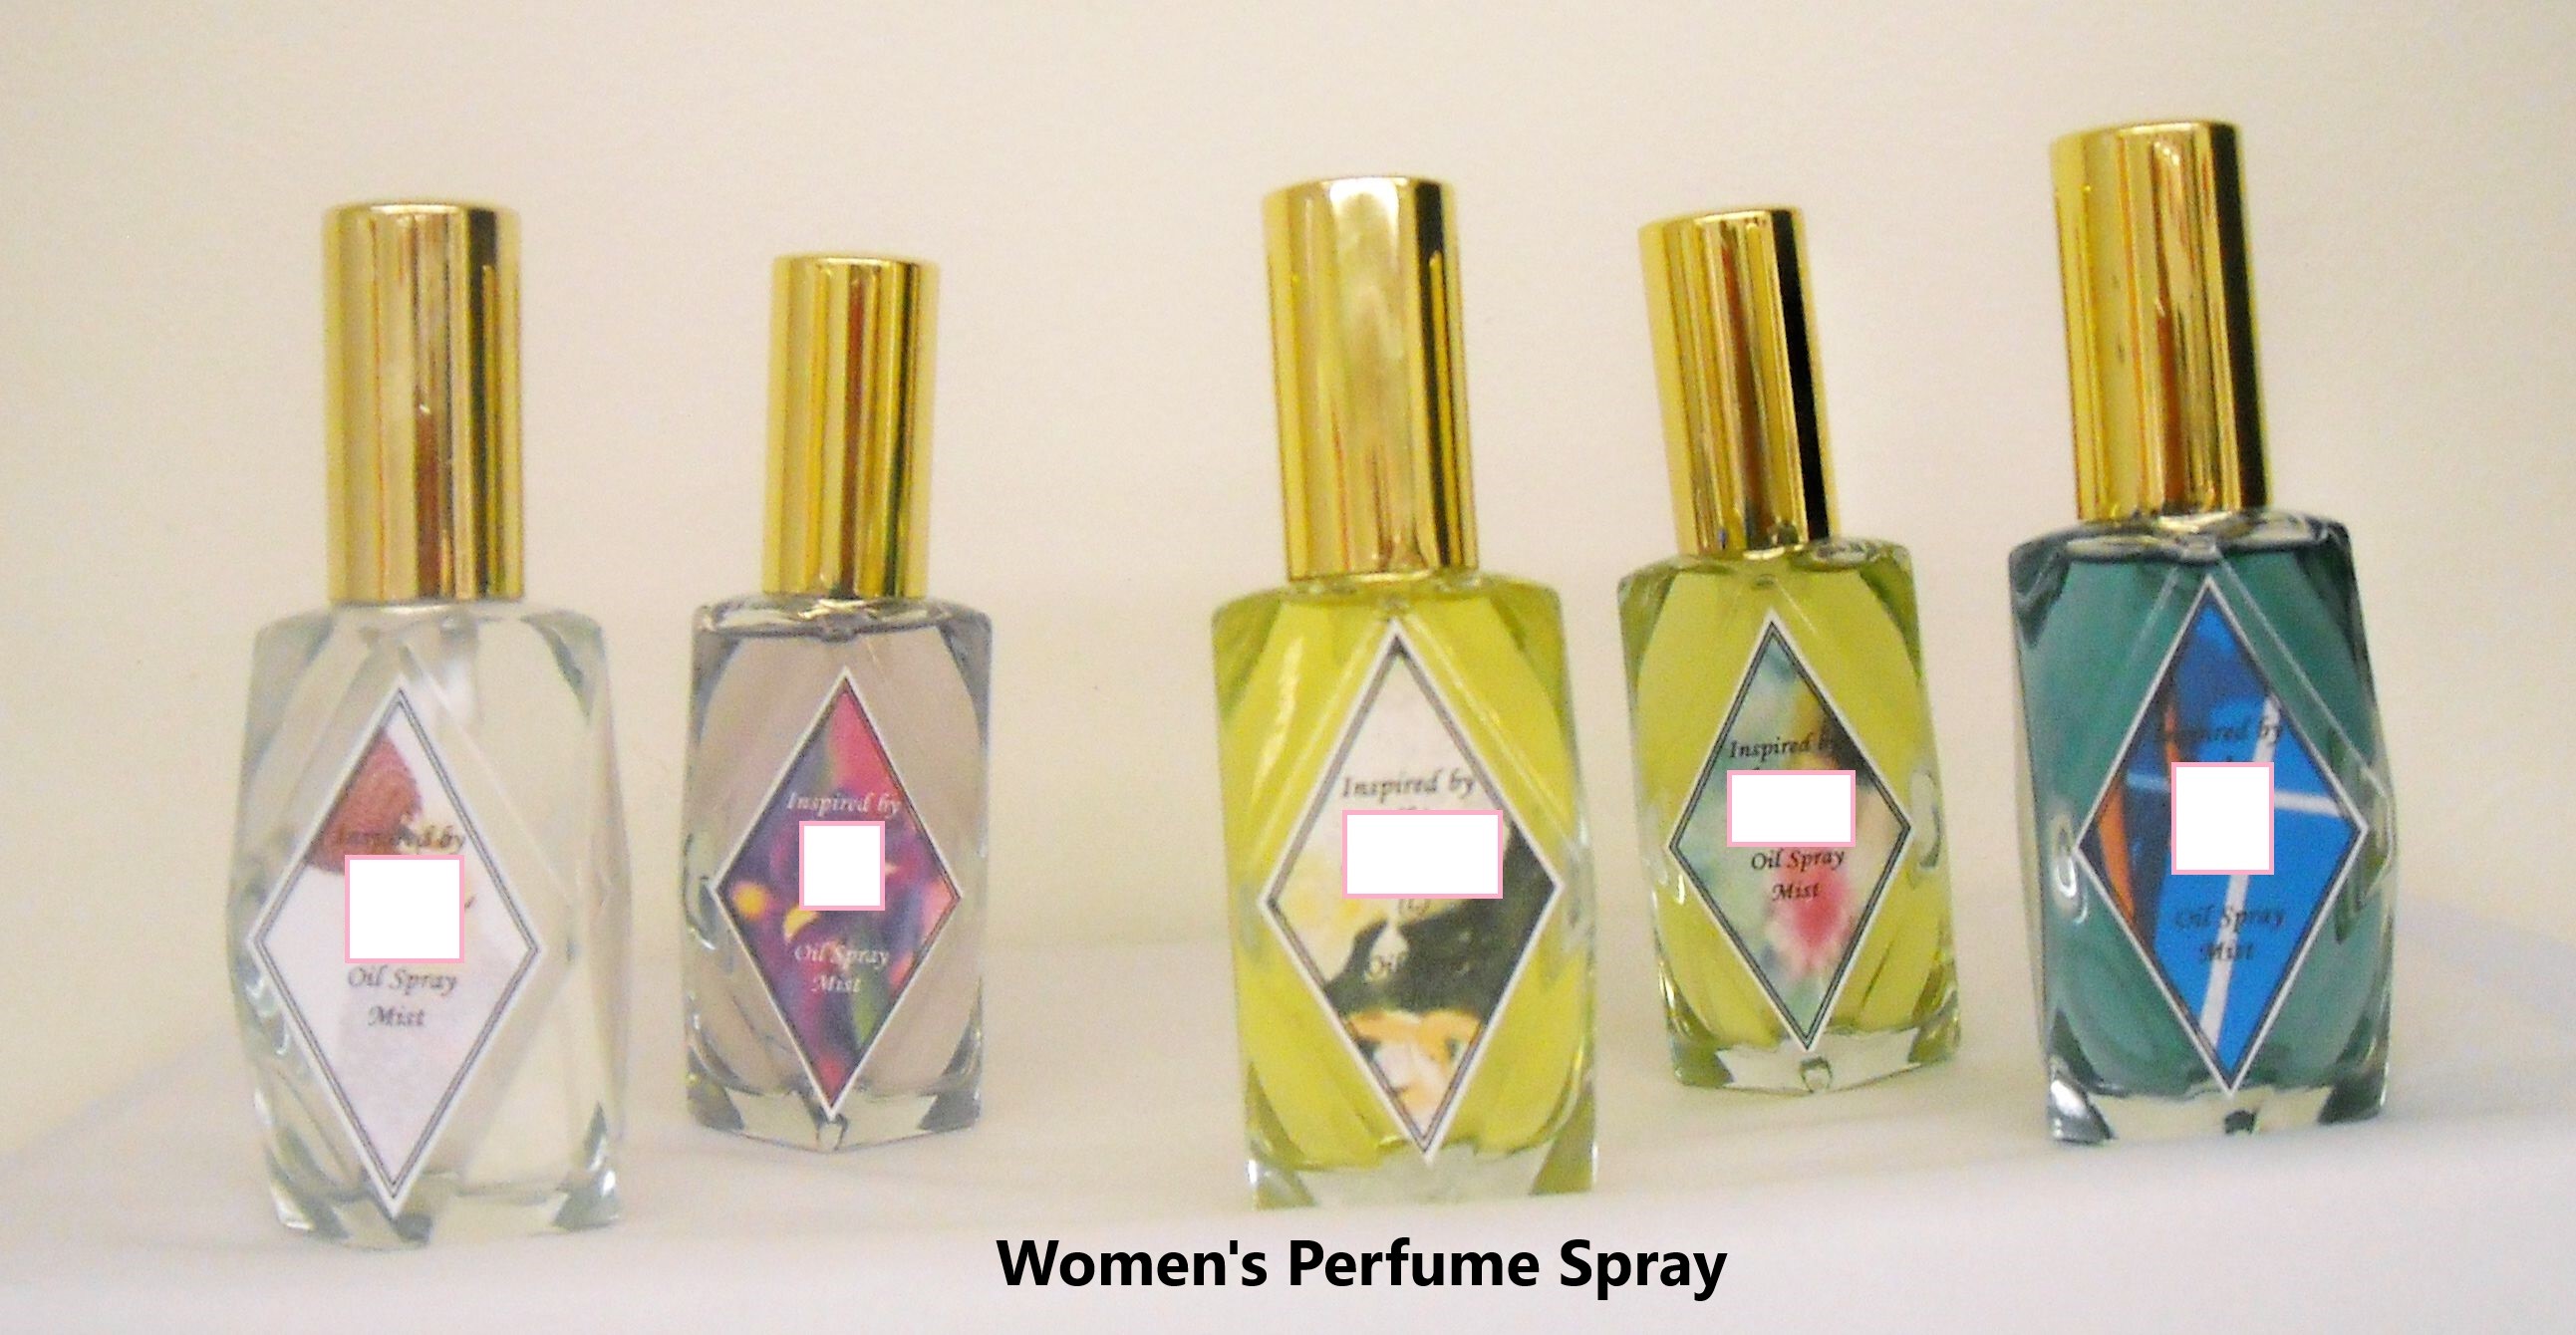 Women's Perfume Sprays